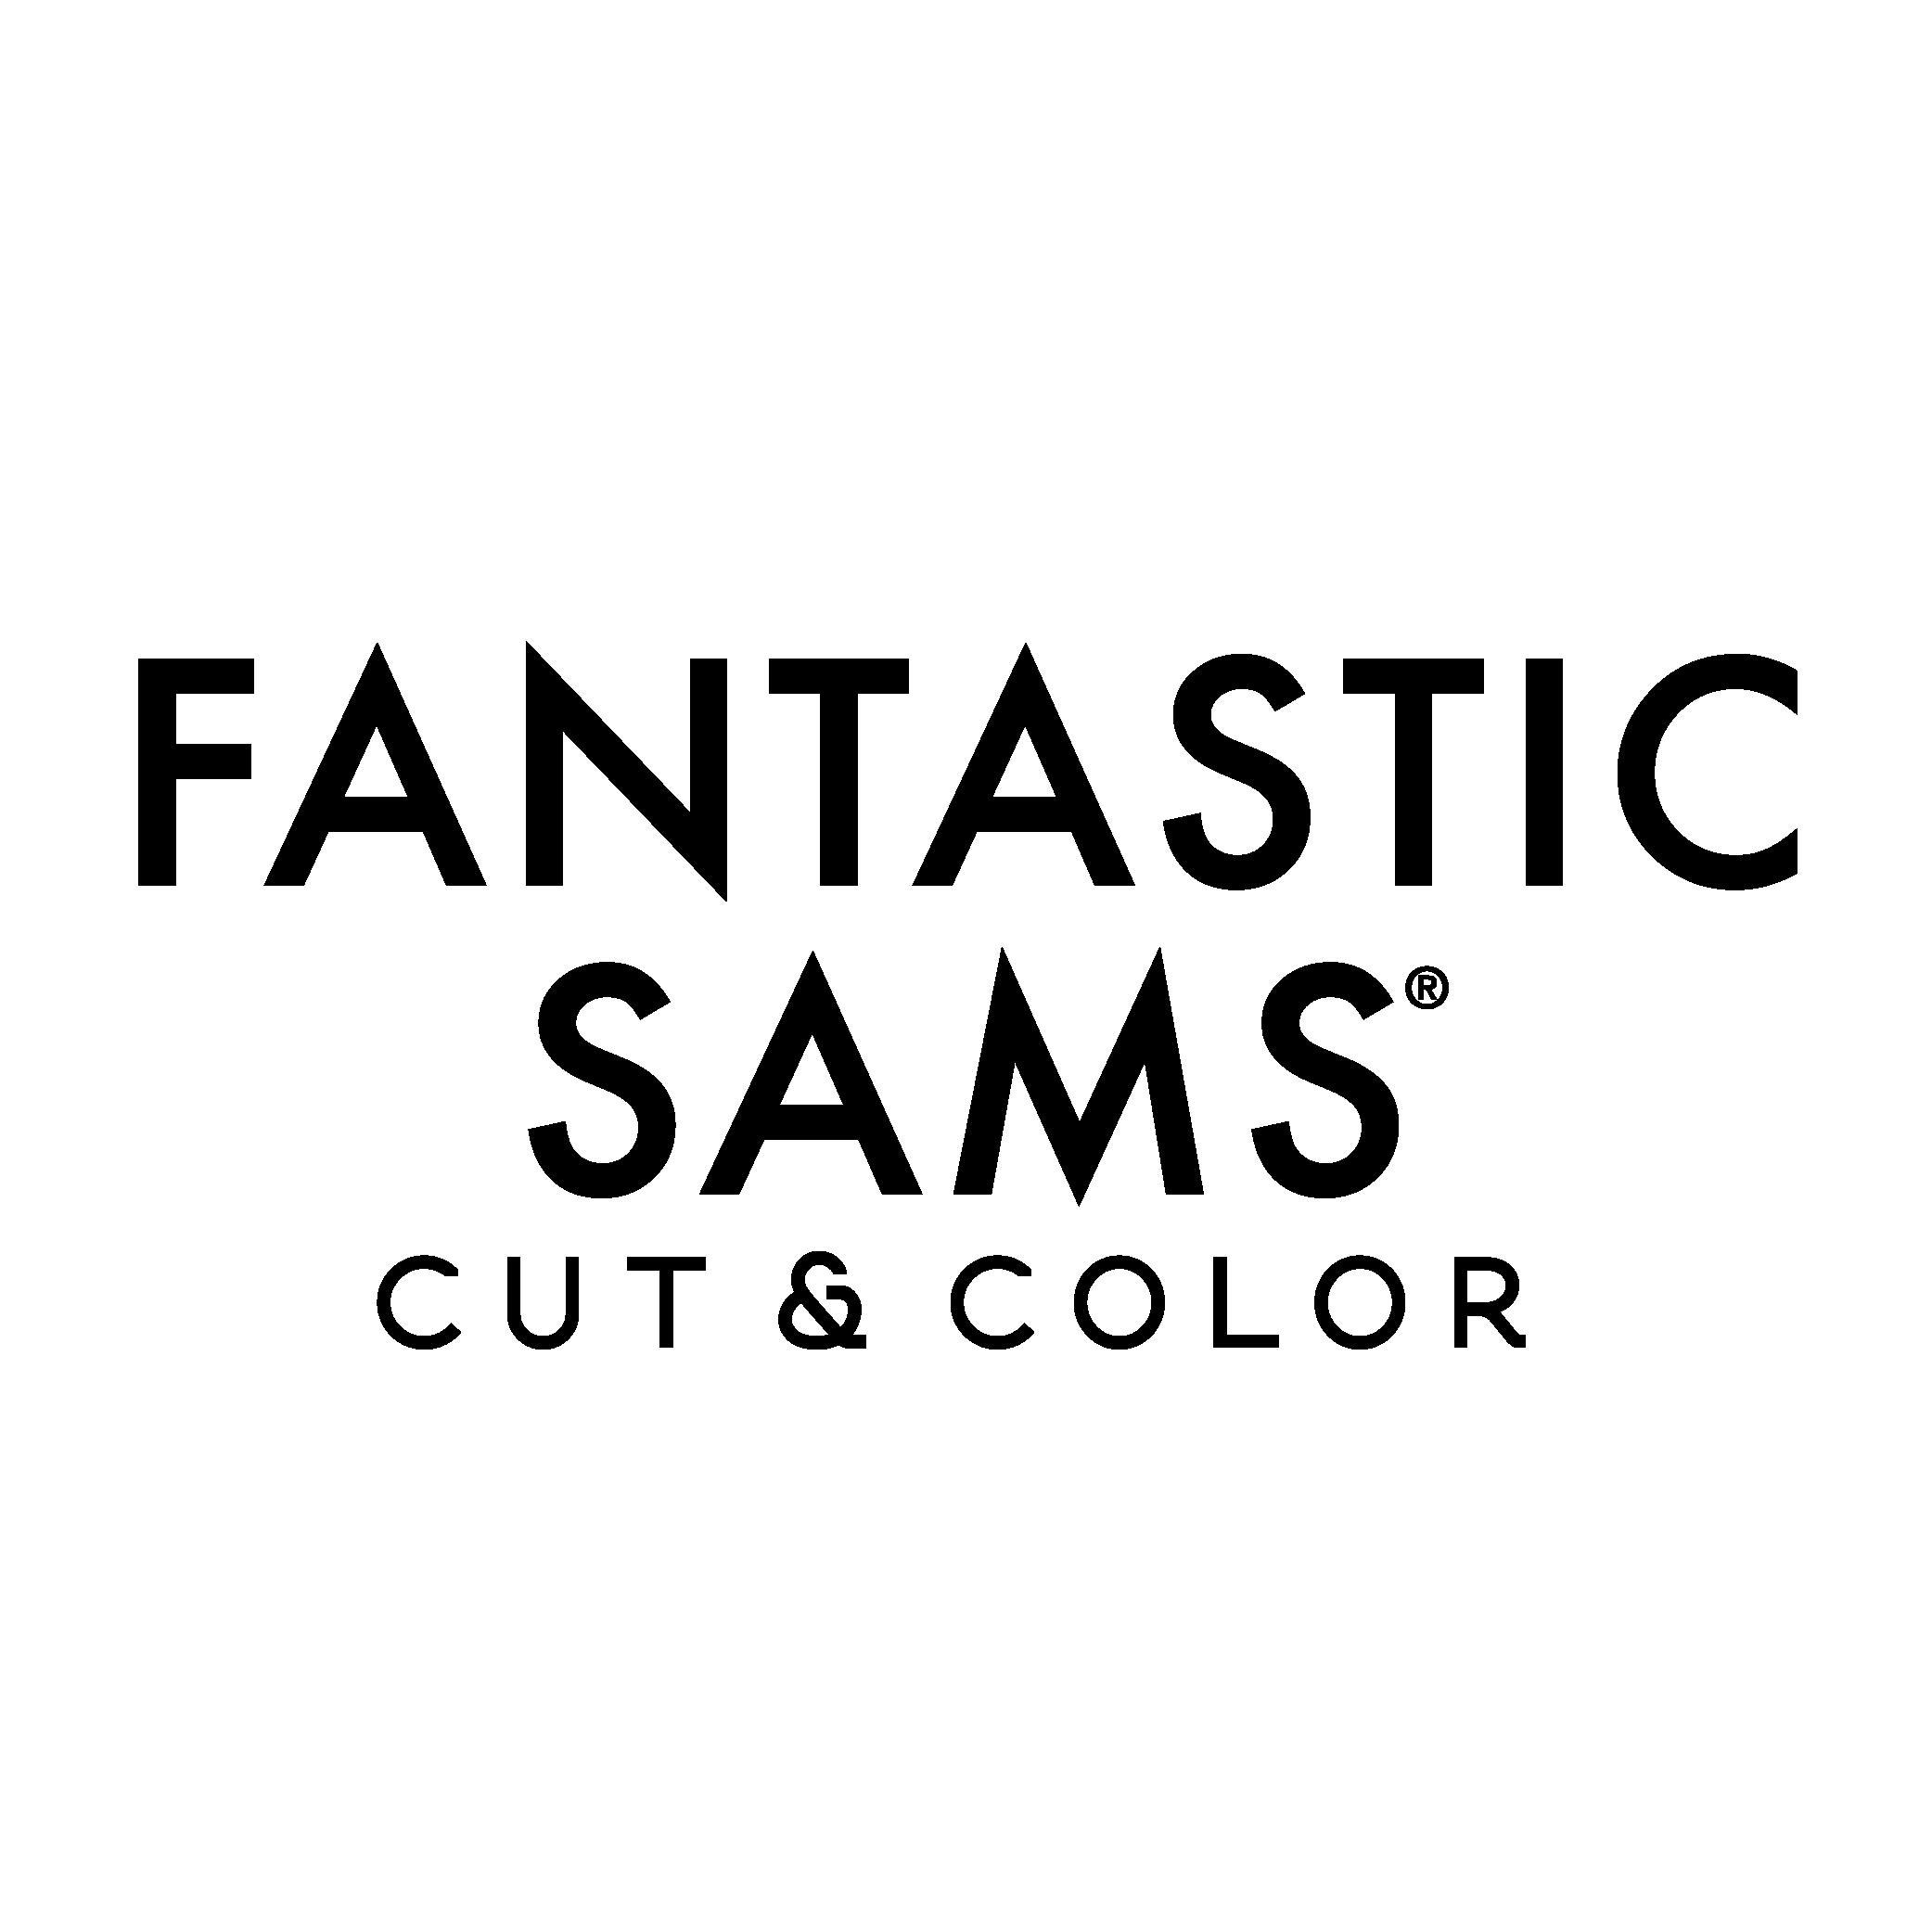 Fantastic Sams Logo - Fantastic Sams Company Culture | Comparably